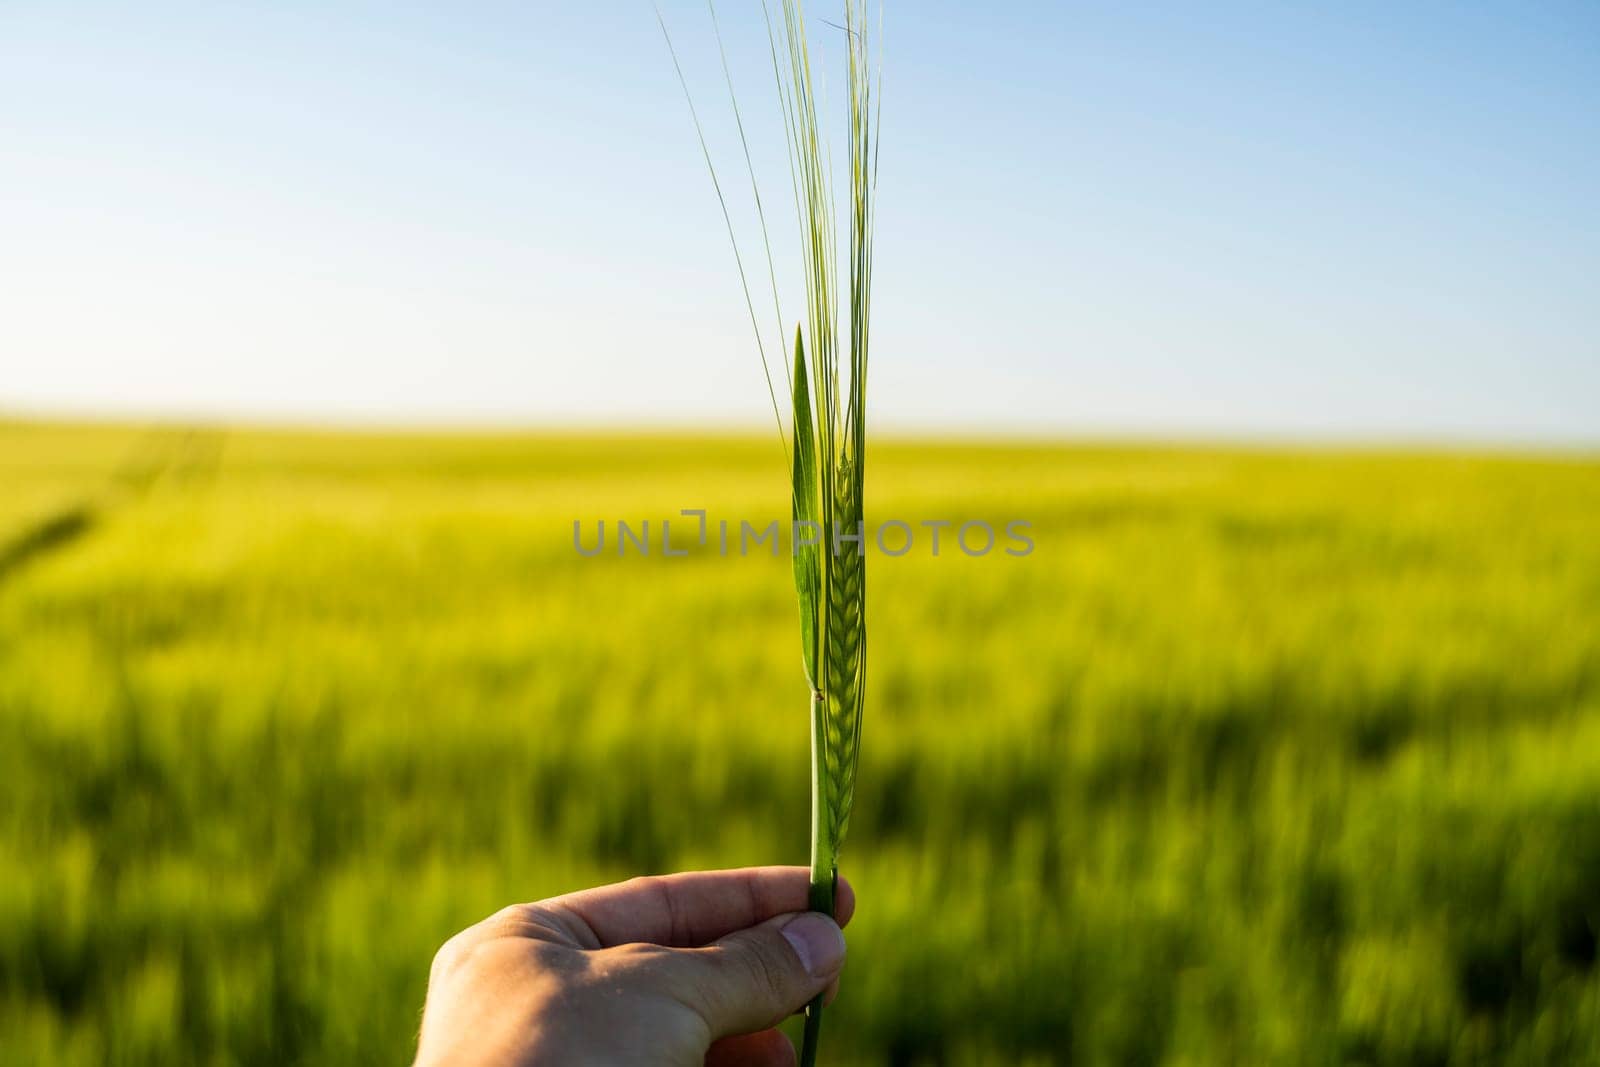 Farmer's holds ears of barley on field under sun, inspecting his harvest. Farmer man walks through wheat field, touching green ears of barley. by vovsht